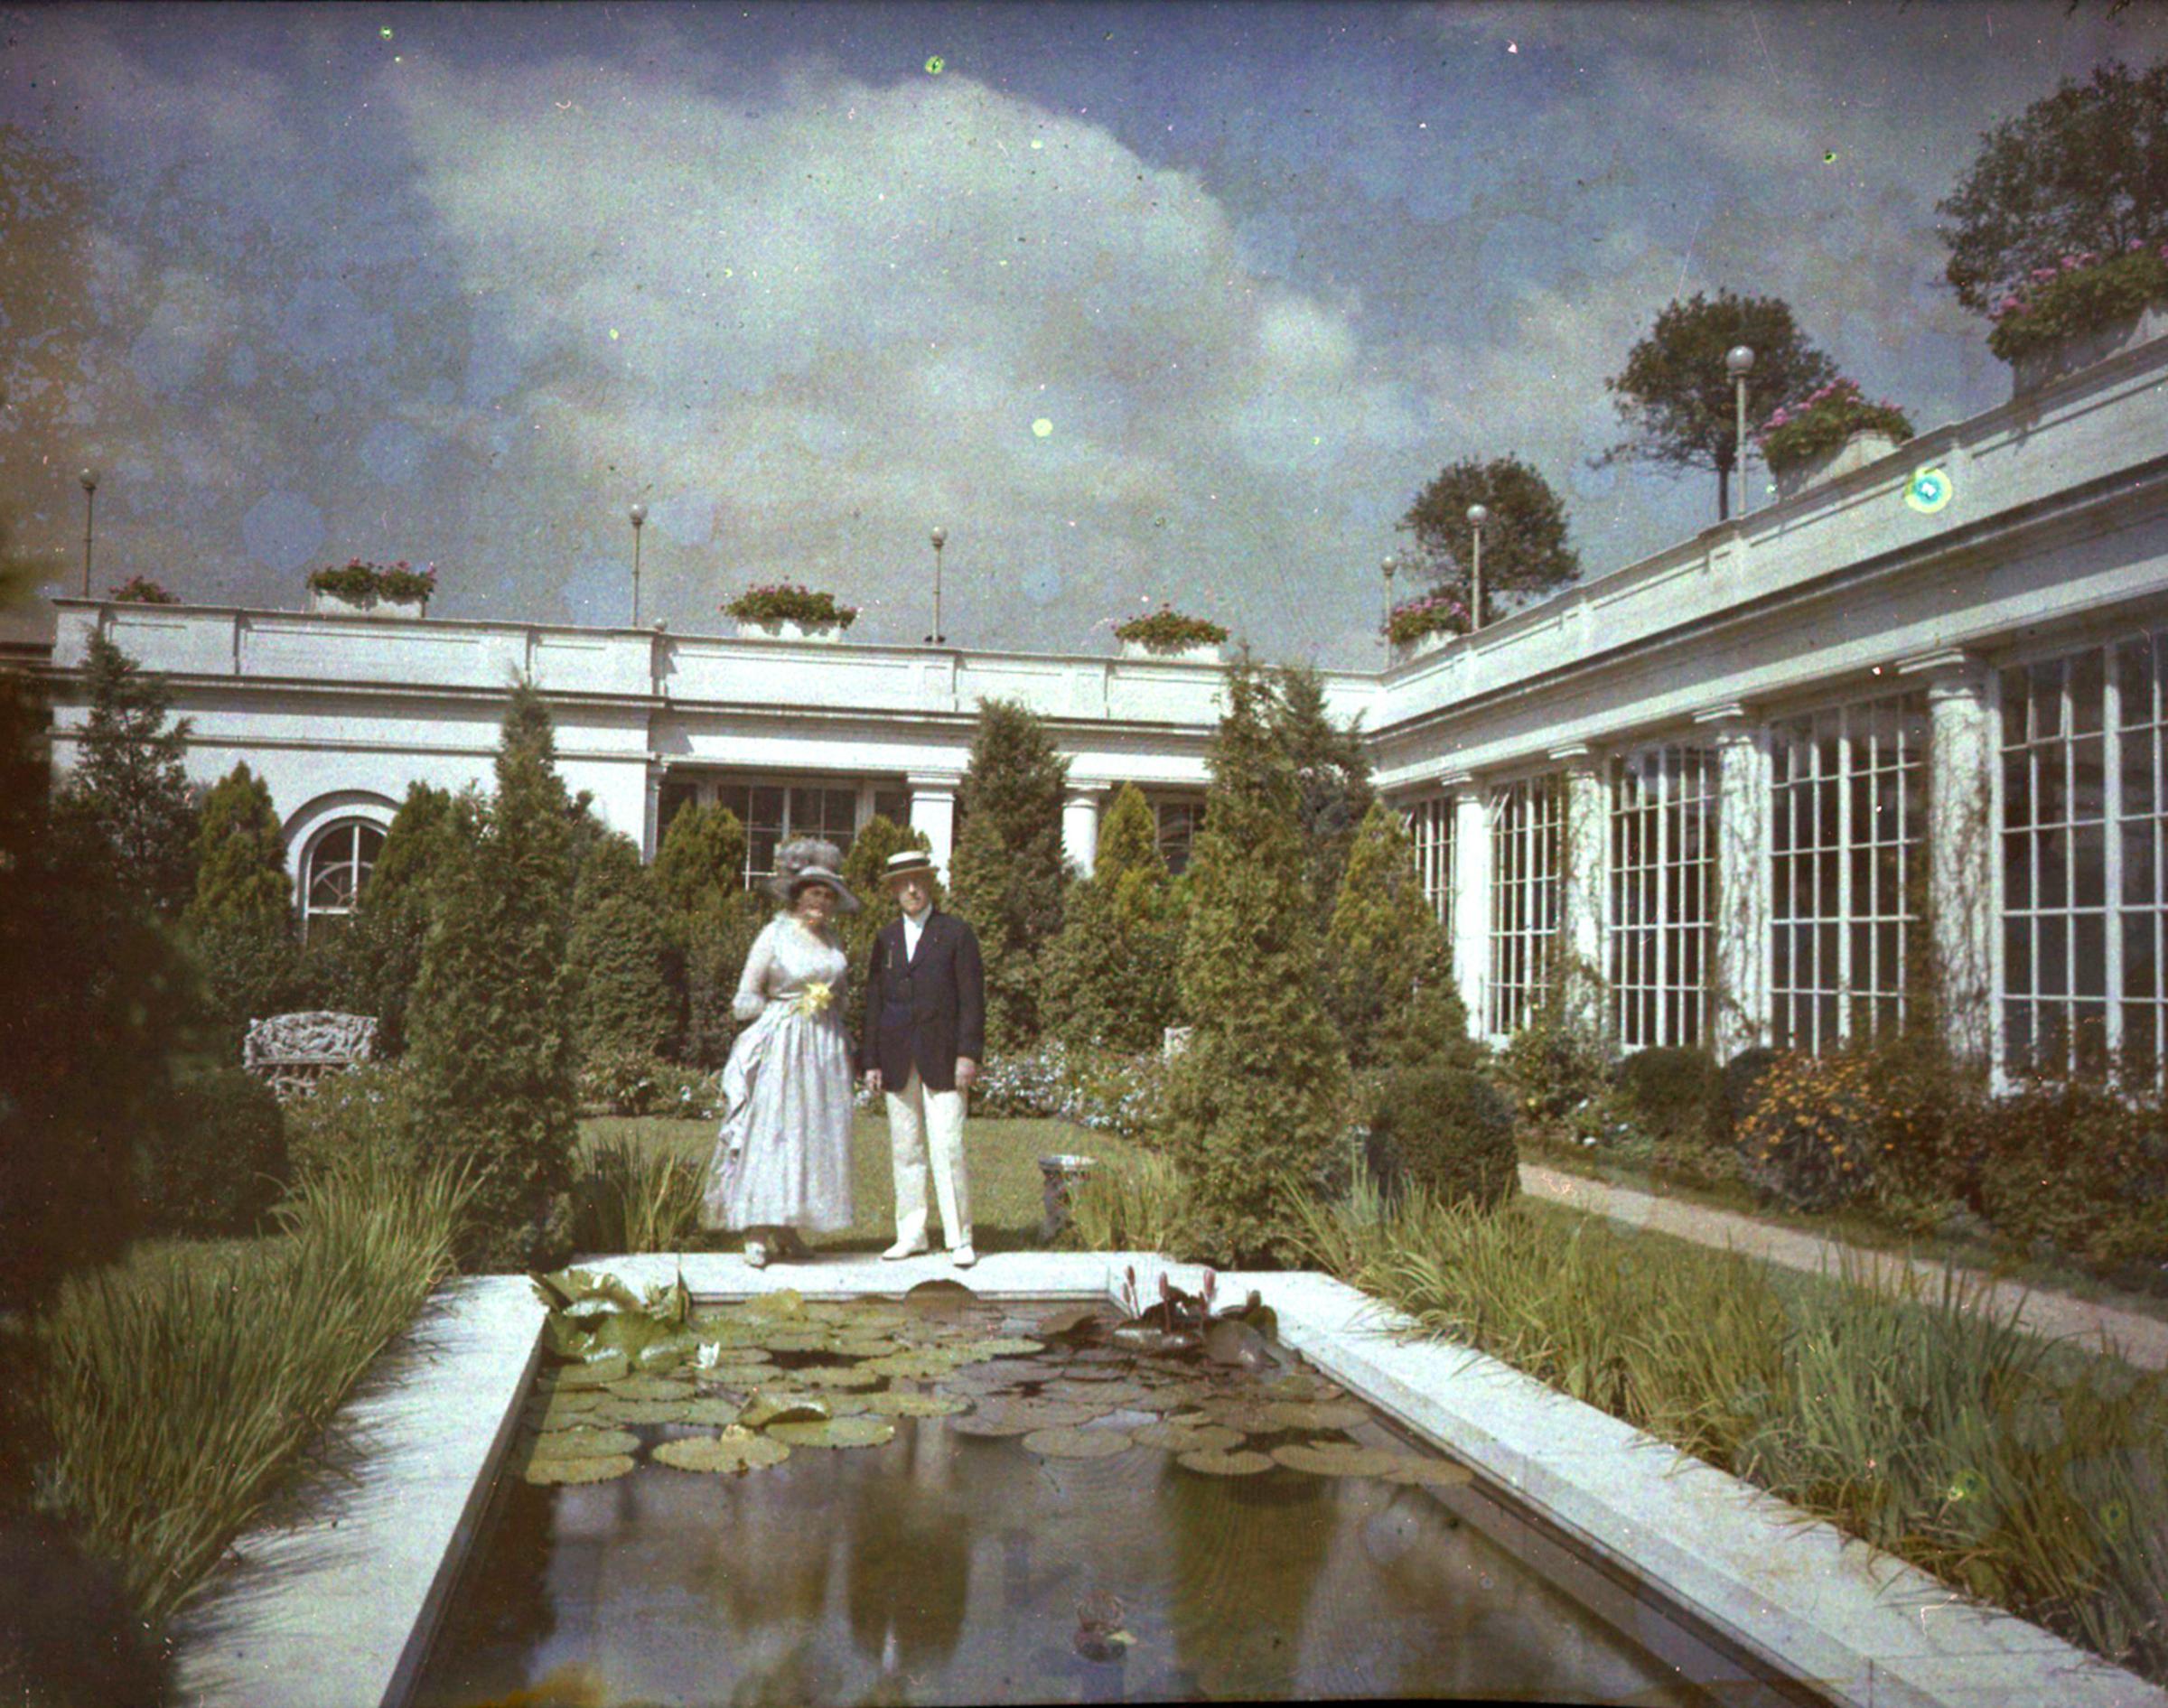 Edith and Woodrow Wilson enjoy the East Garden in their summer finery.